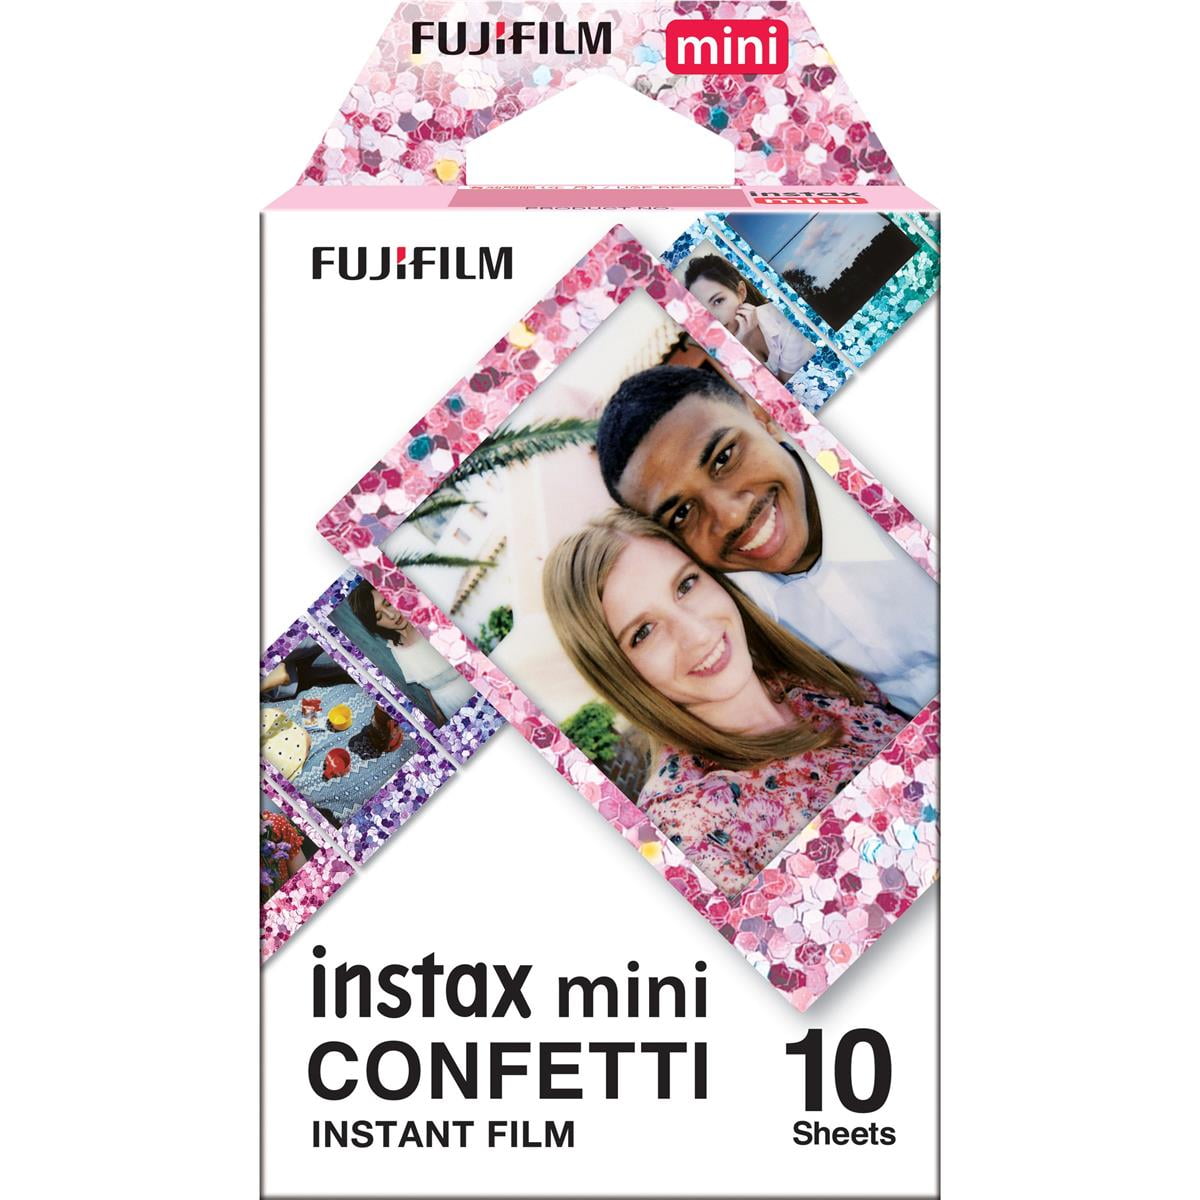 INSTAX MINI FILM CONFETTI - 10 EXPOSURE